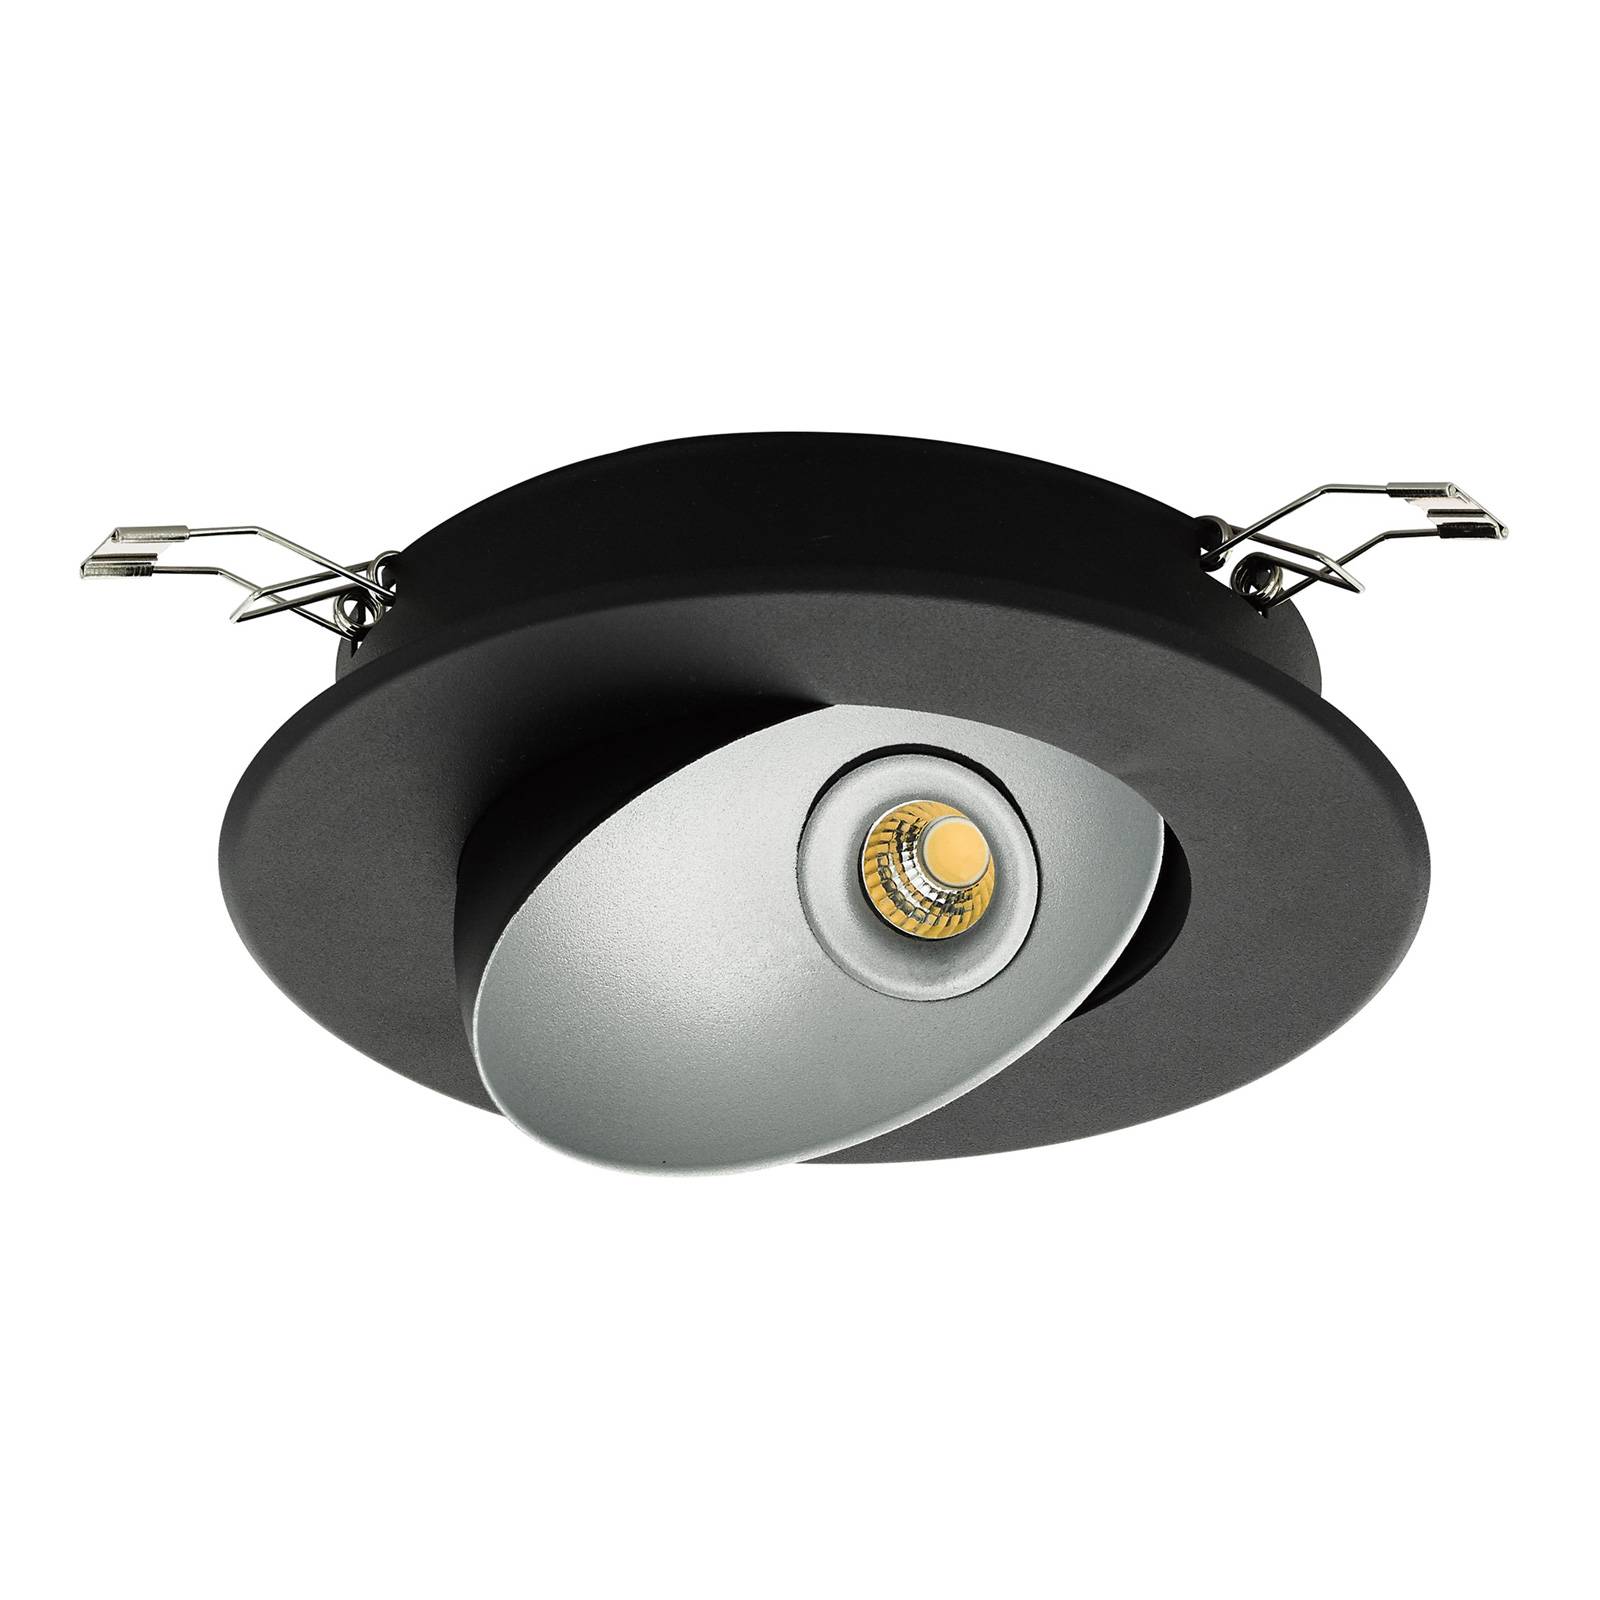 LED inbouwspot Ronzano 1 zwart-zilver